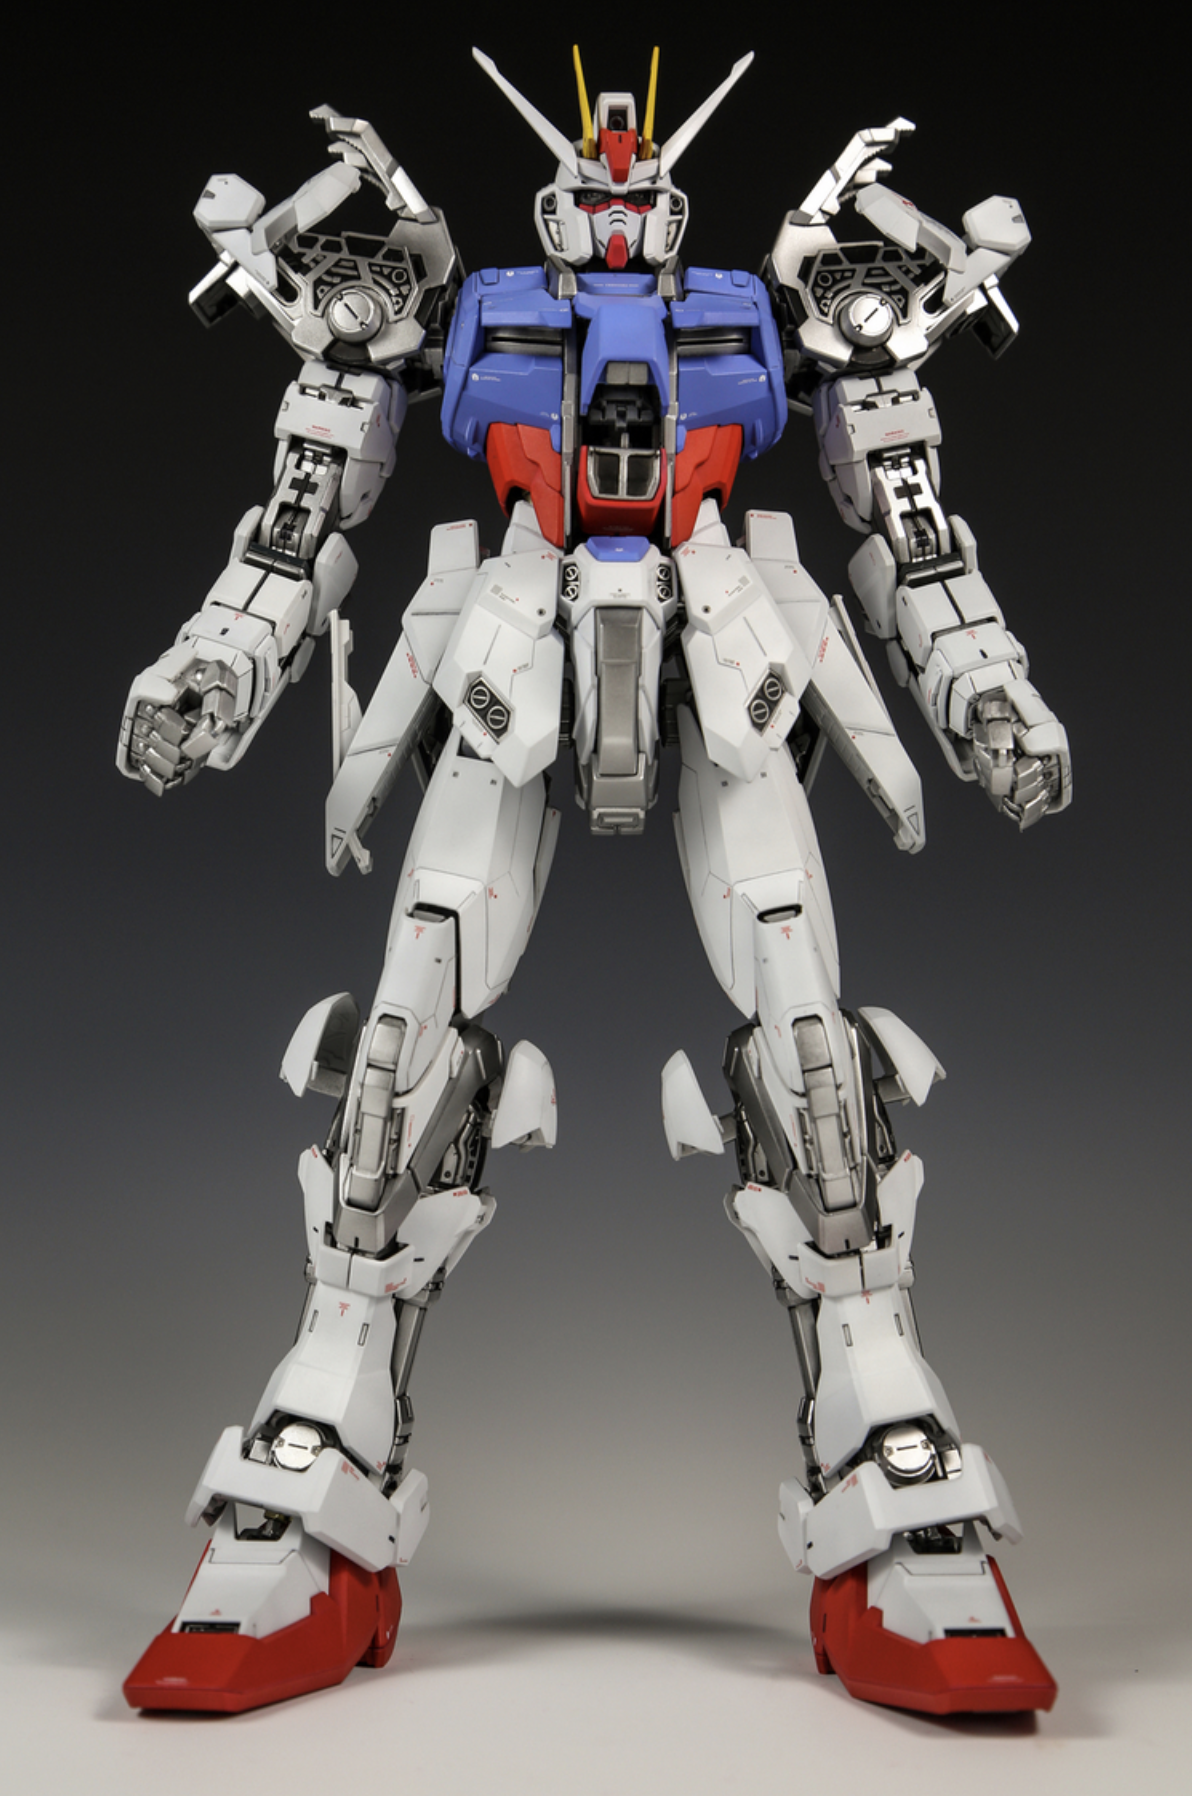 Gundam - Maquette GAT-X105 Strike Gundam O.M.N.I. Enforcer Mobile Suit PG 1/60